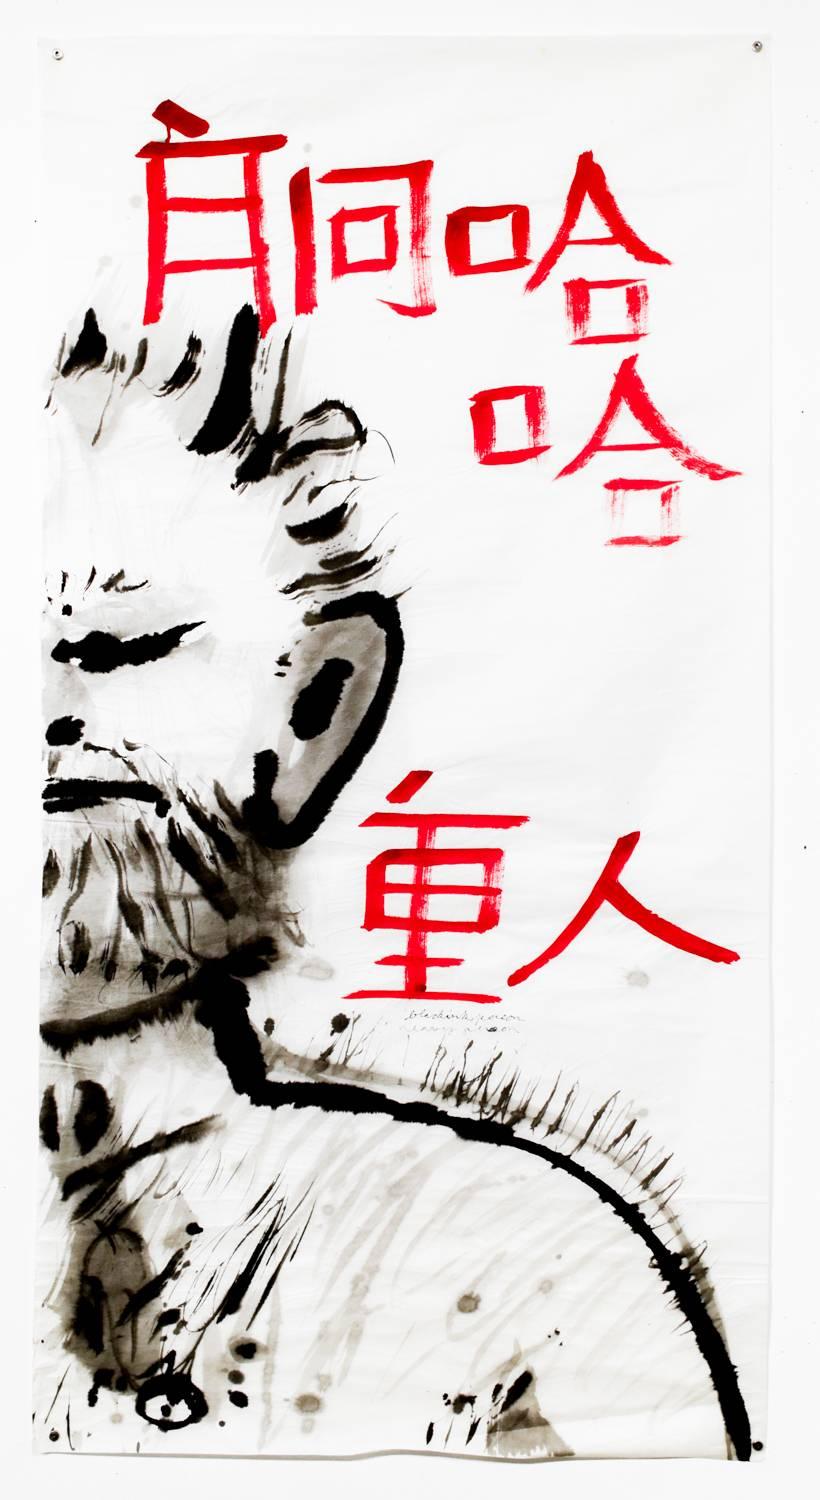 Isaiah Zagar Figurative Art - Angry Chinese Painter VI